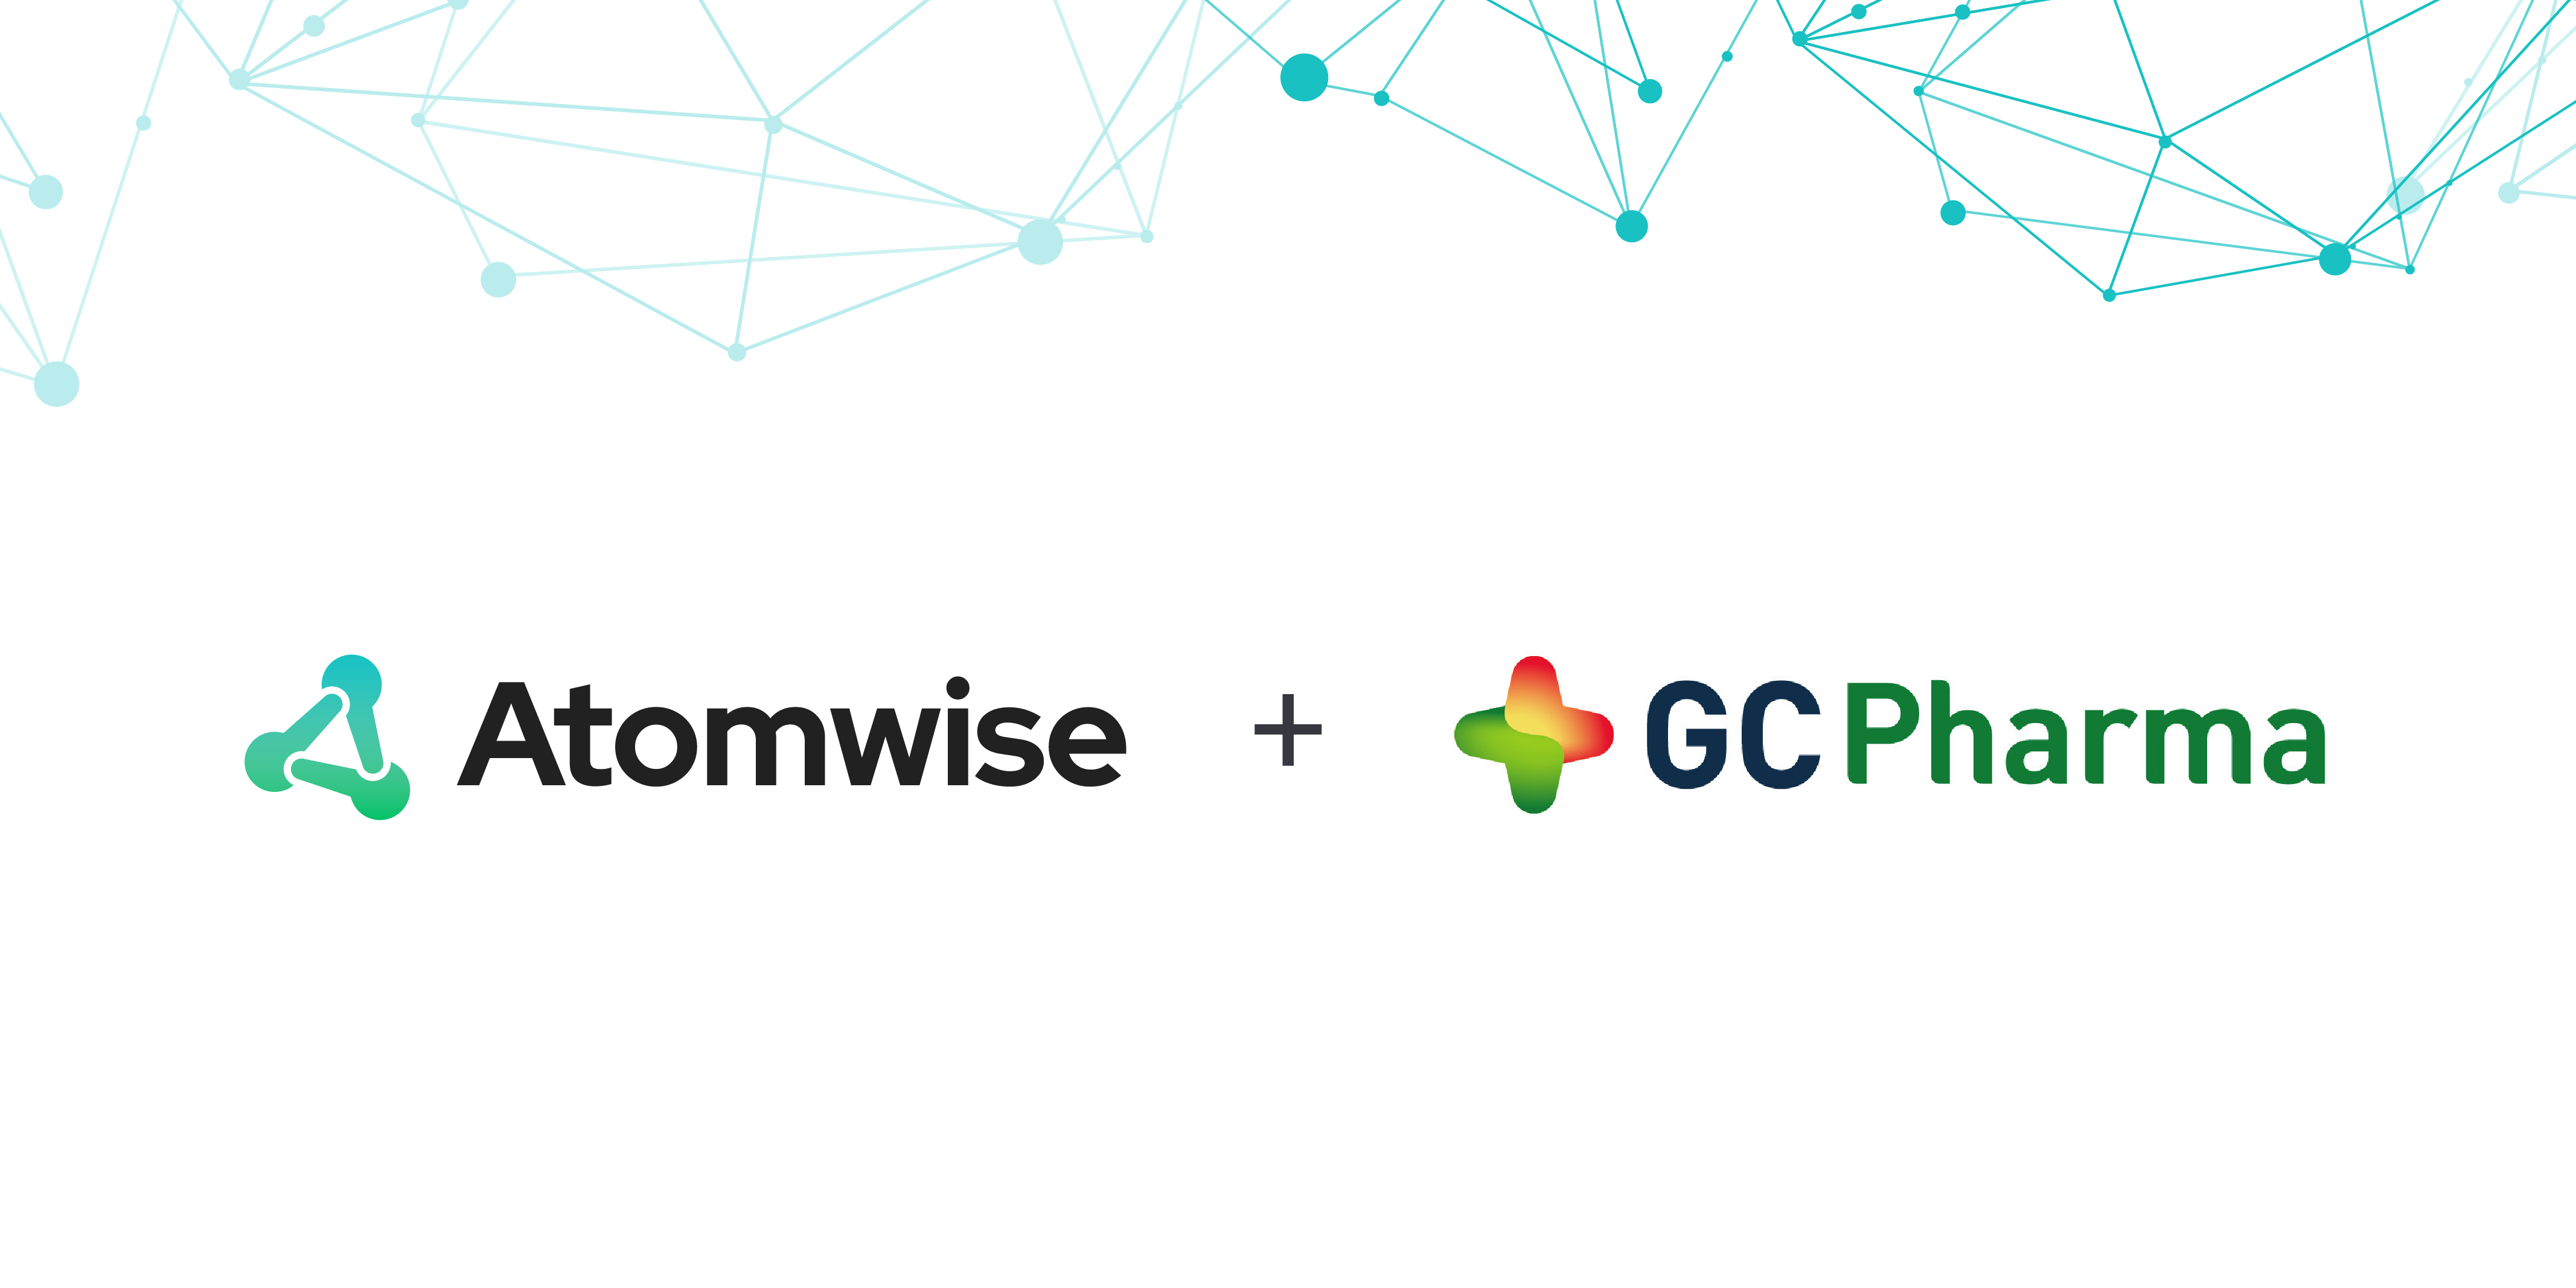 Atomwise and GC Pharma partnership